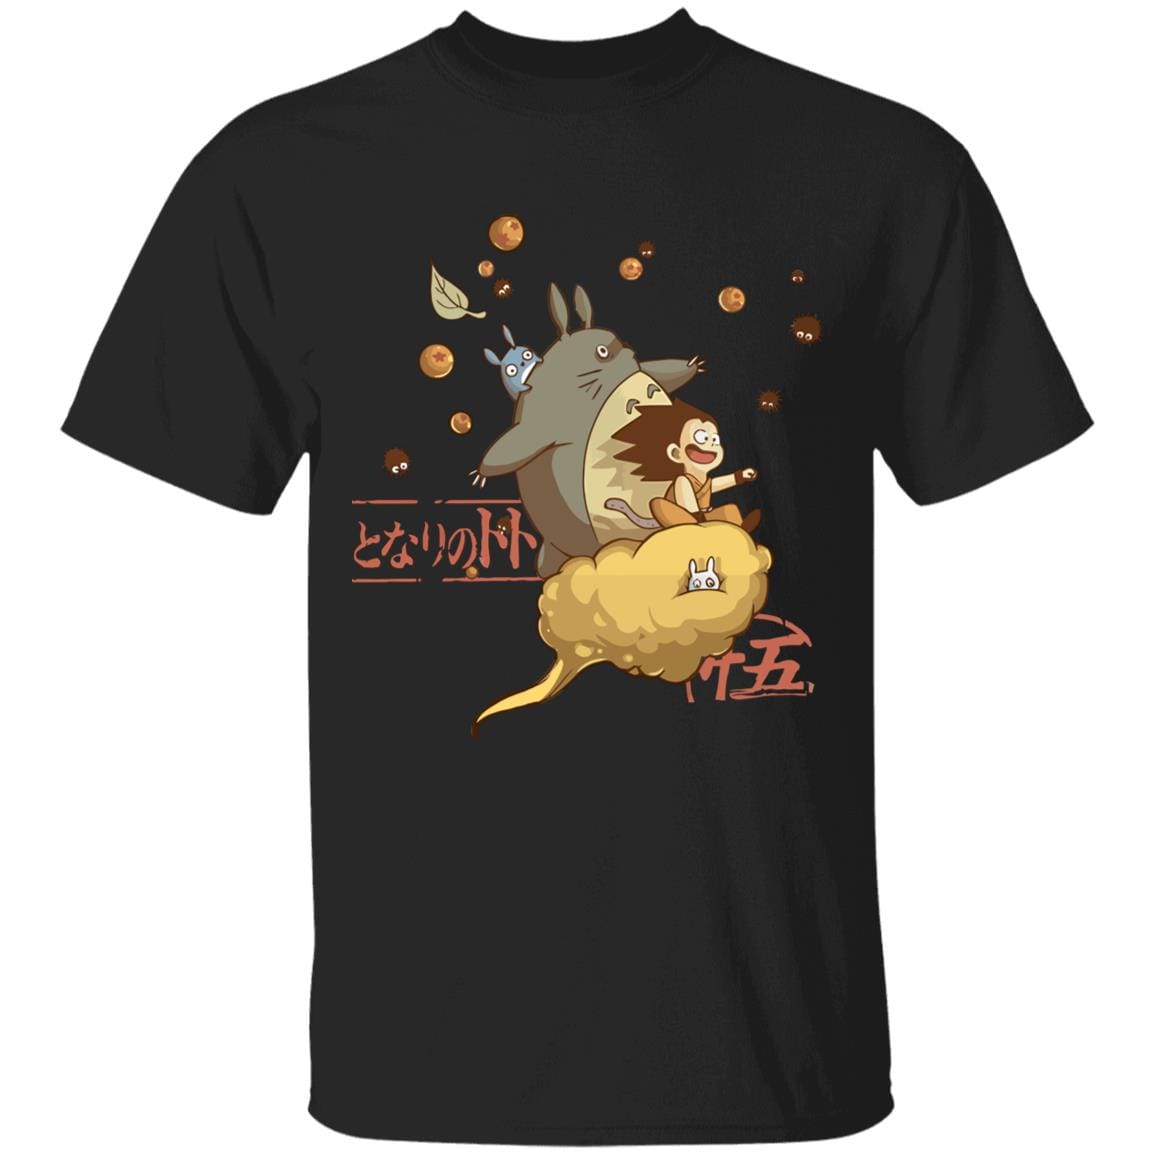 Totoro and Son Goku T Shirt